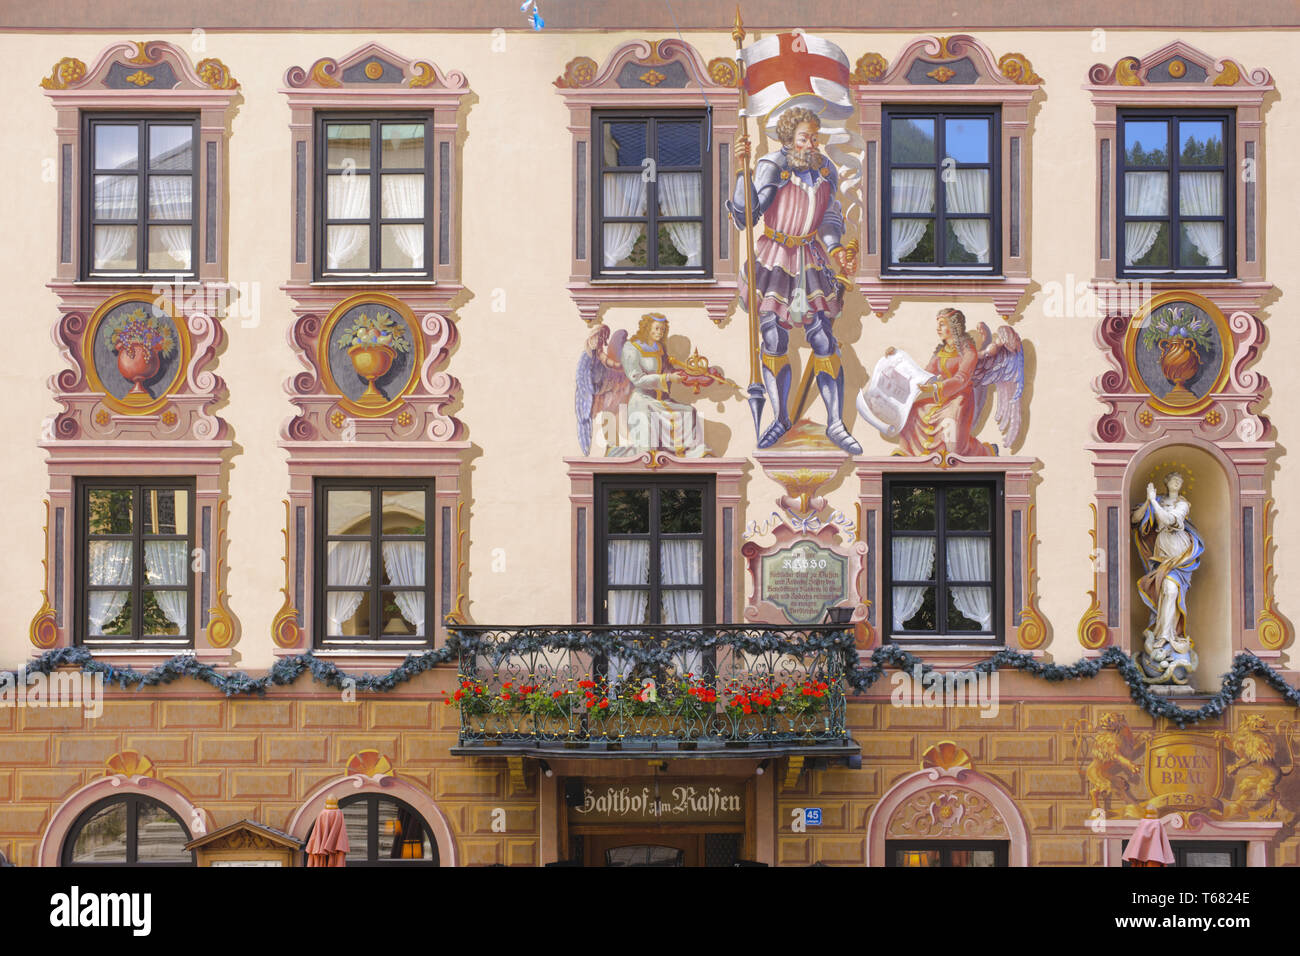 Lüftlmalerei, a kind of trompe l'oeil on houses in Bavaria and Austria Stock Photo